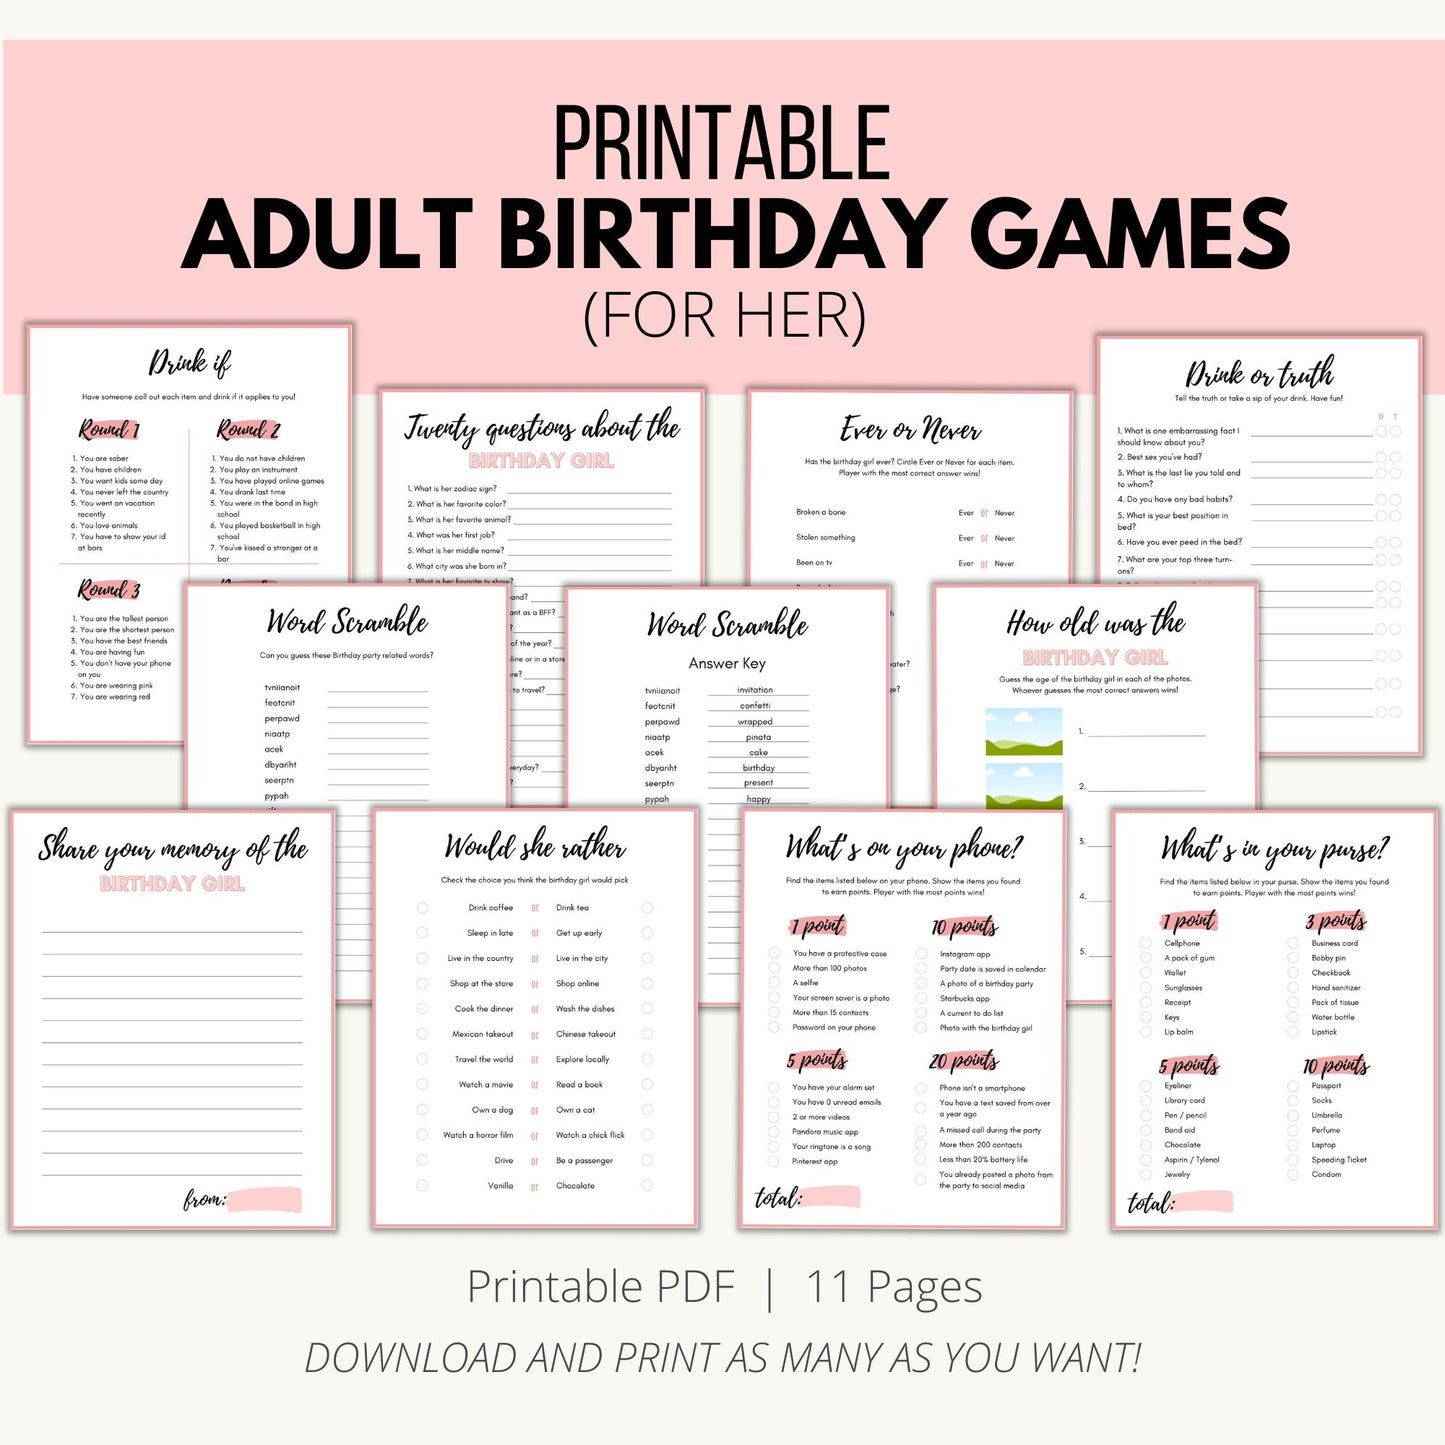 Printable Adult Birthday Games